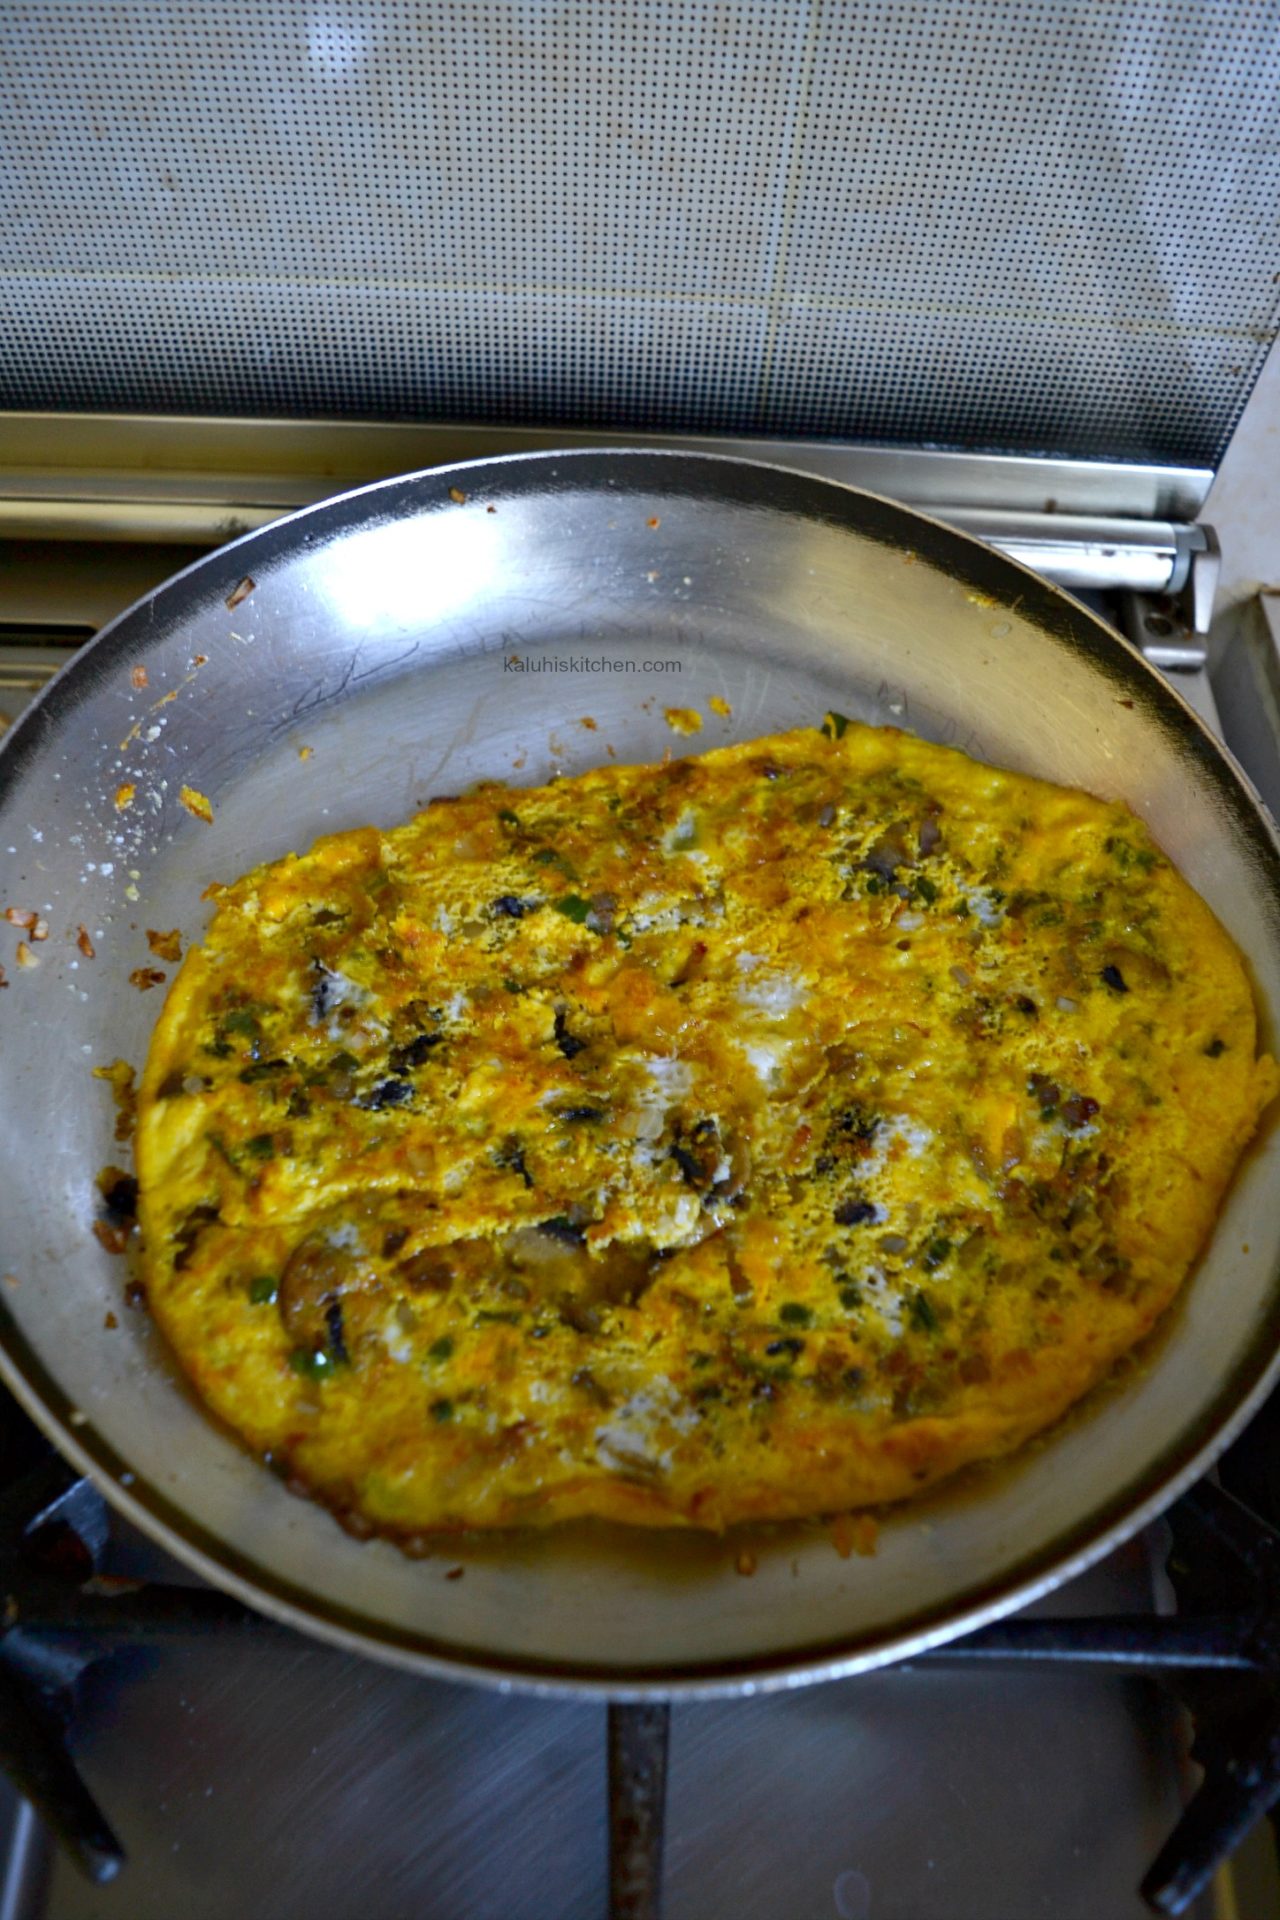 flip your omelette swiftly and in one sweep to aviod having it split_kaluhiskitchen.com_mushroom omelette